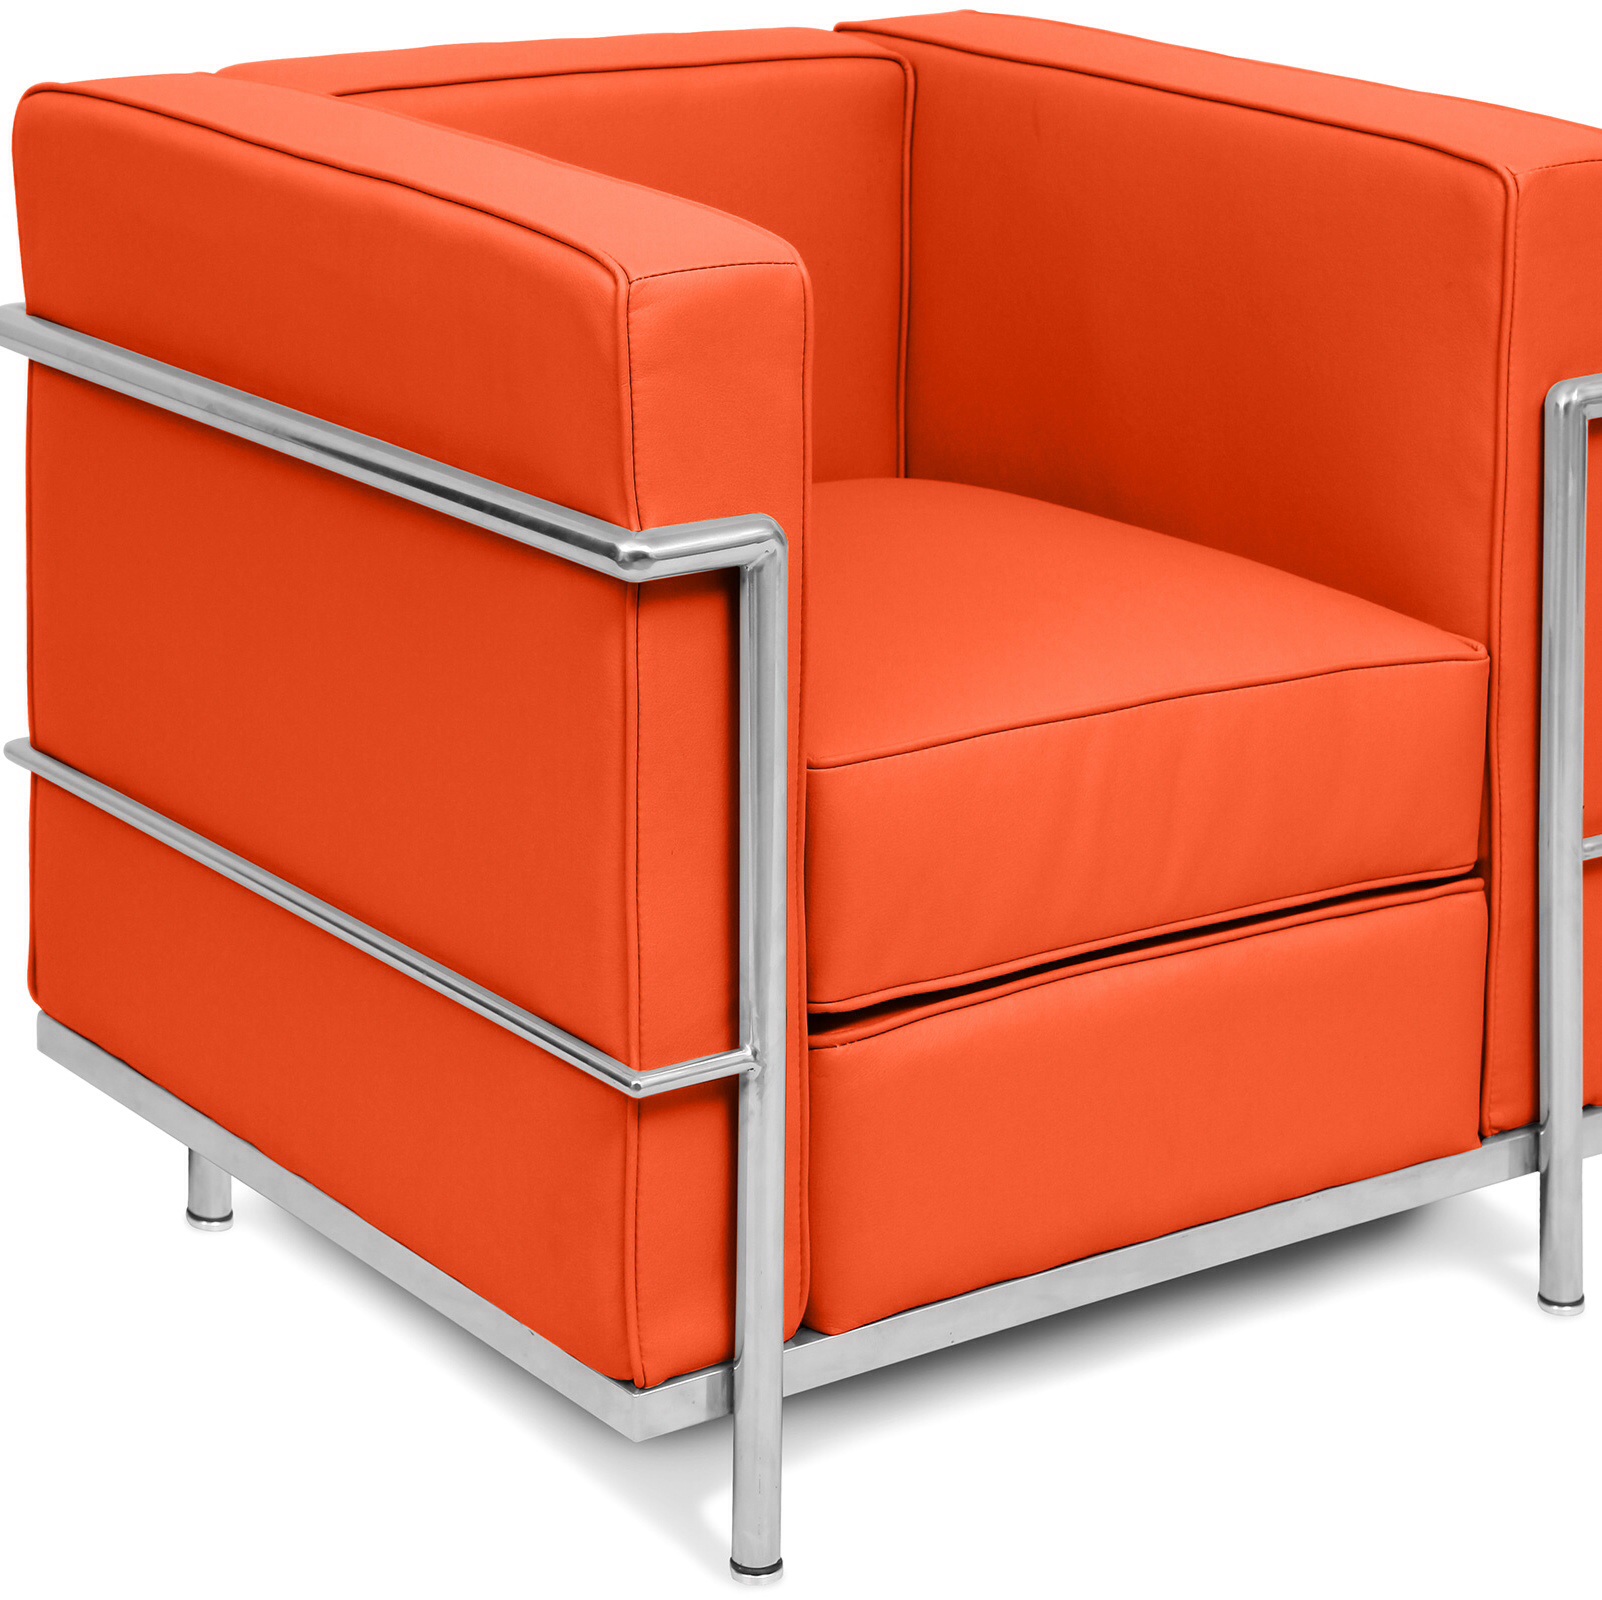 Bright coloured Corbusier style armchair Orange